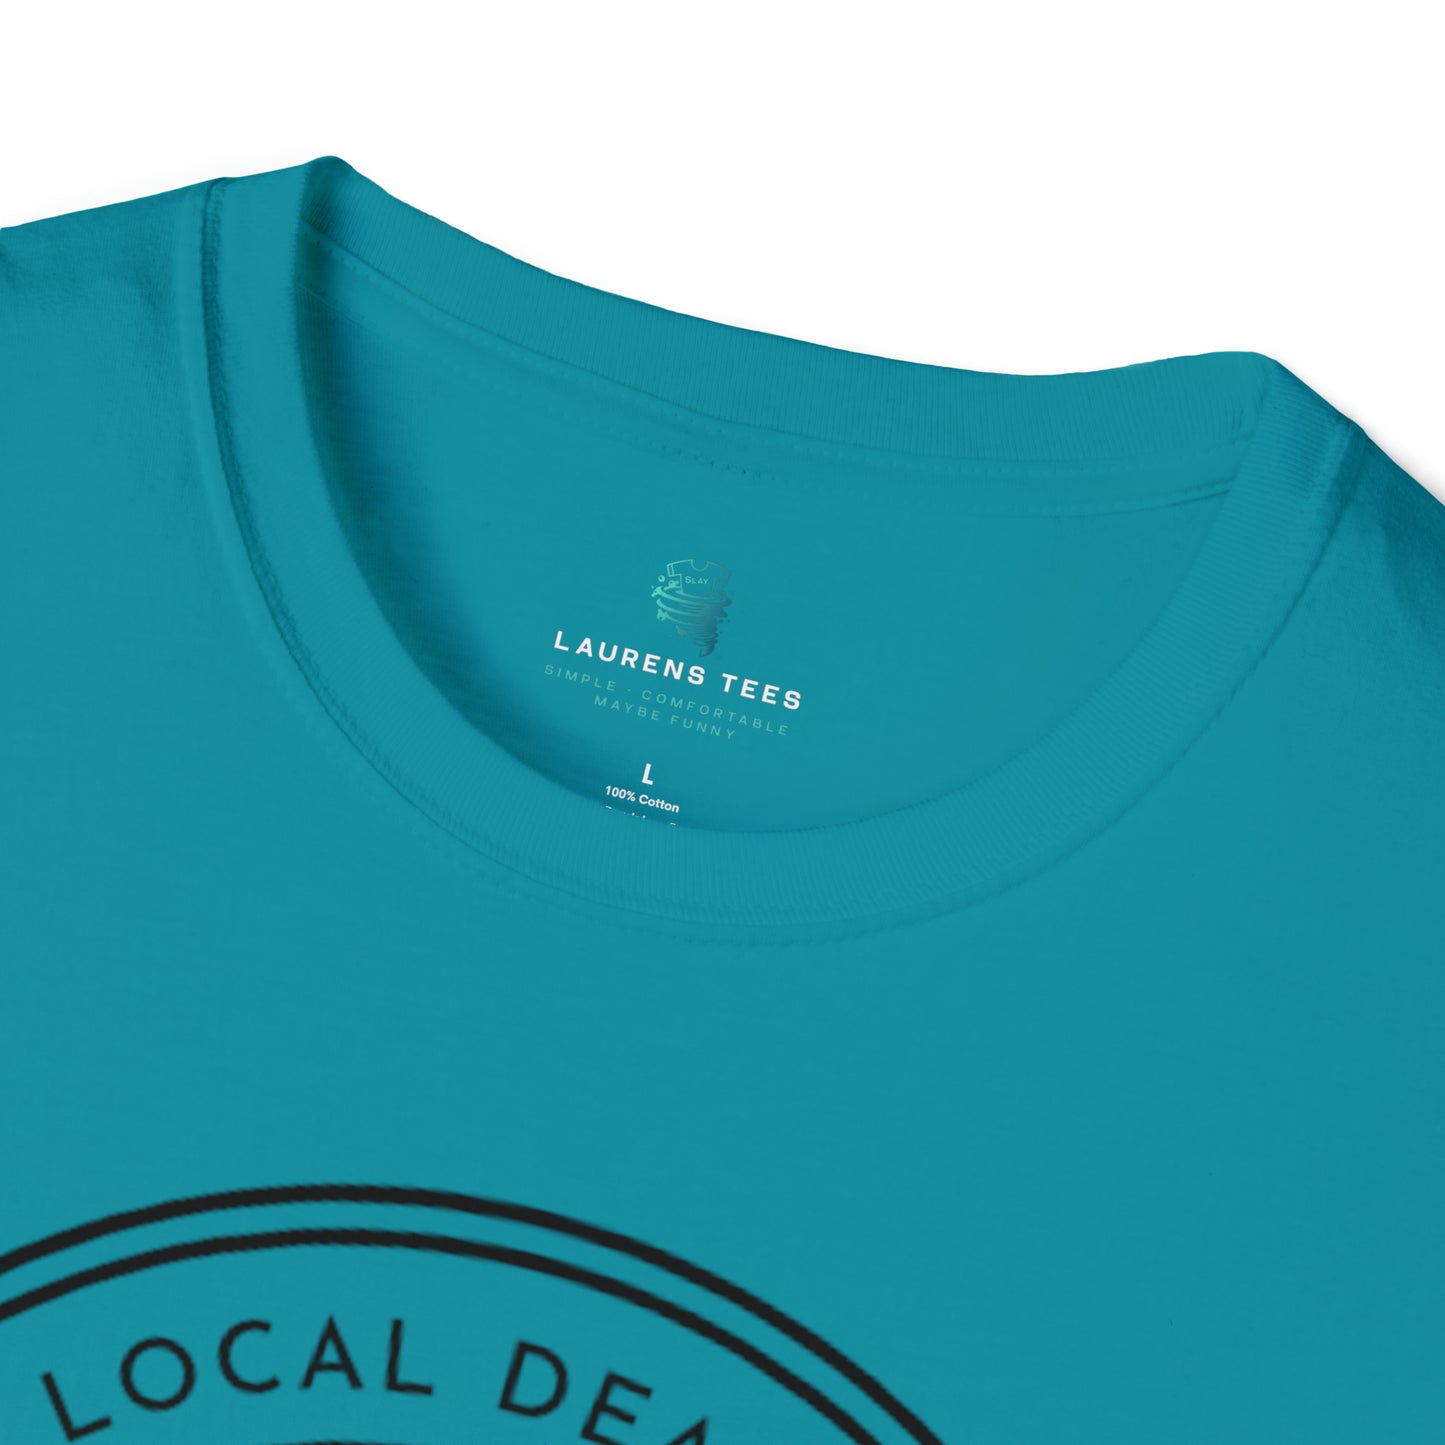 Local Fresh Fresh Eggs - Unisex Softstyle T-Shirt